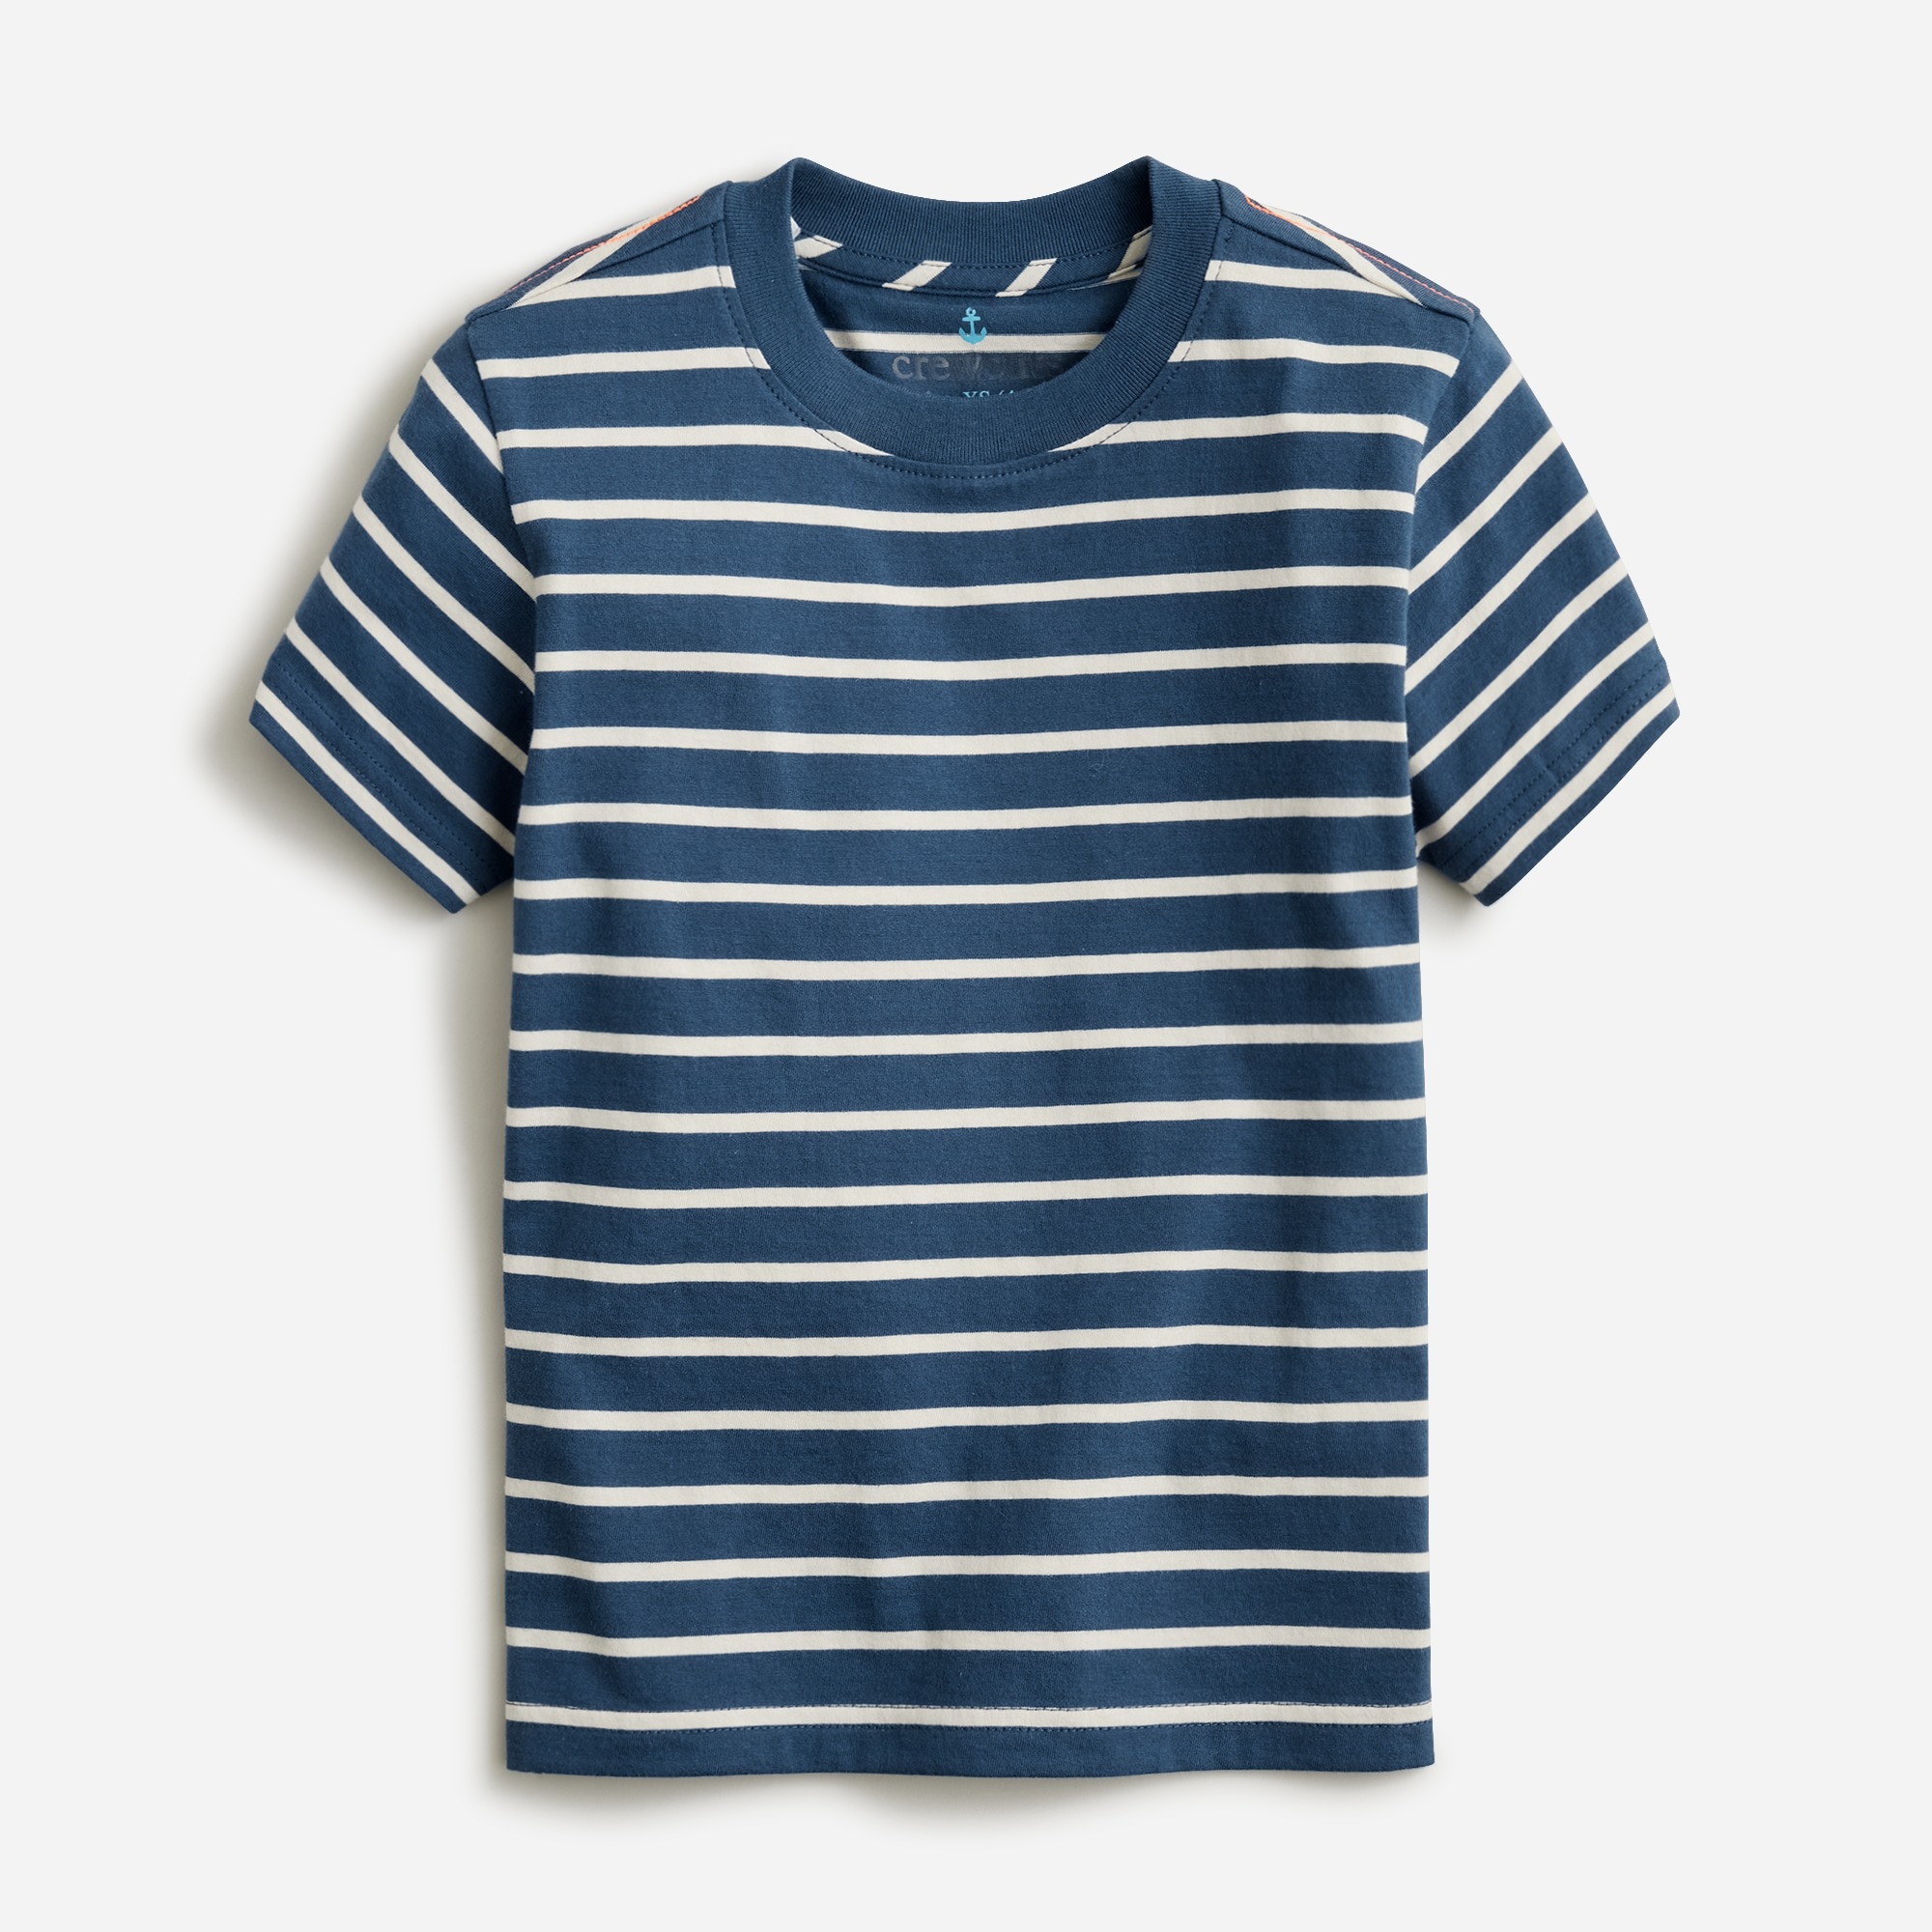  Kids' crewneck T-shirt in stripe